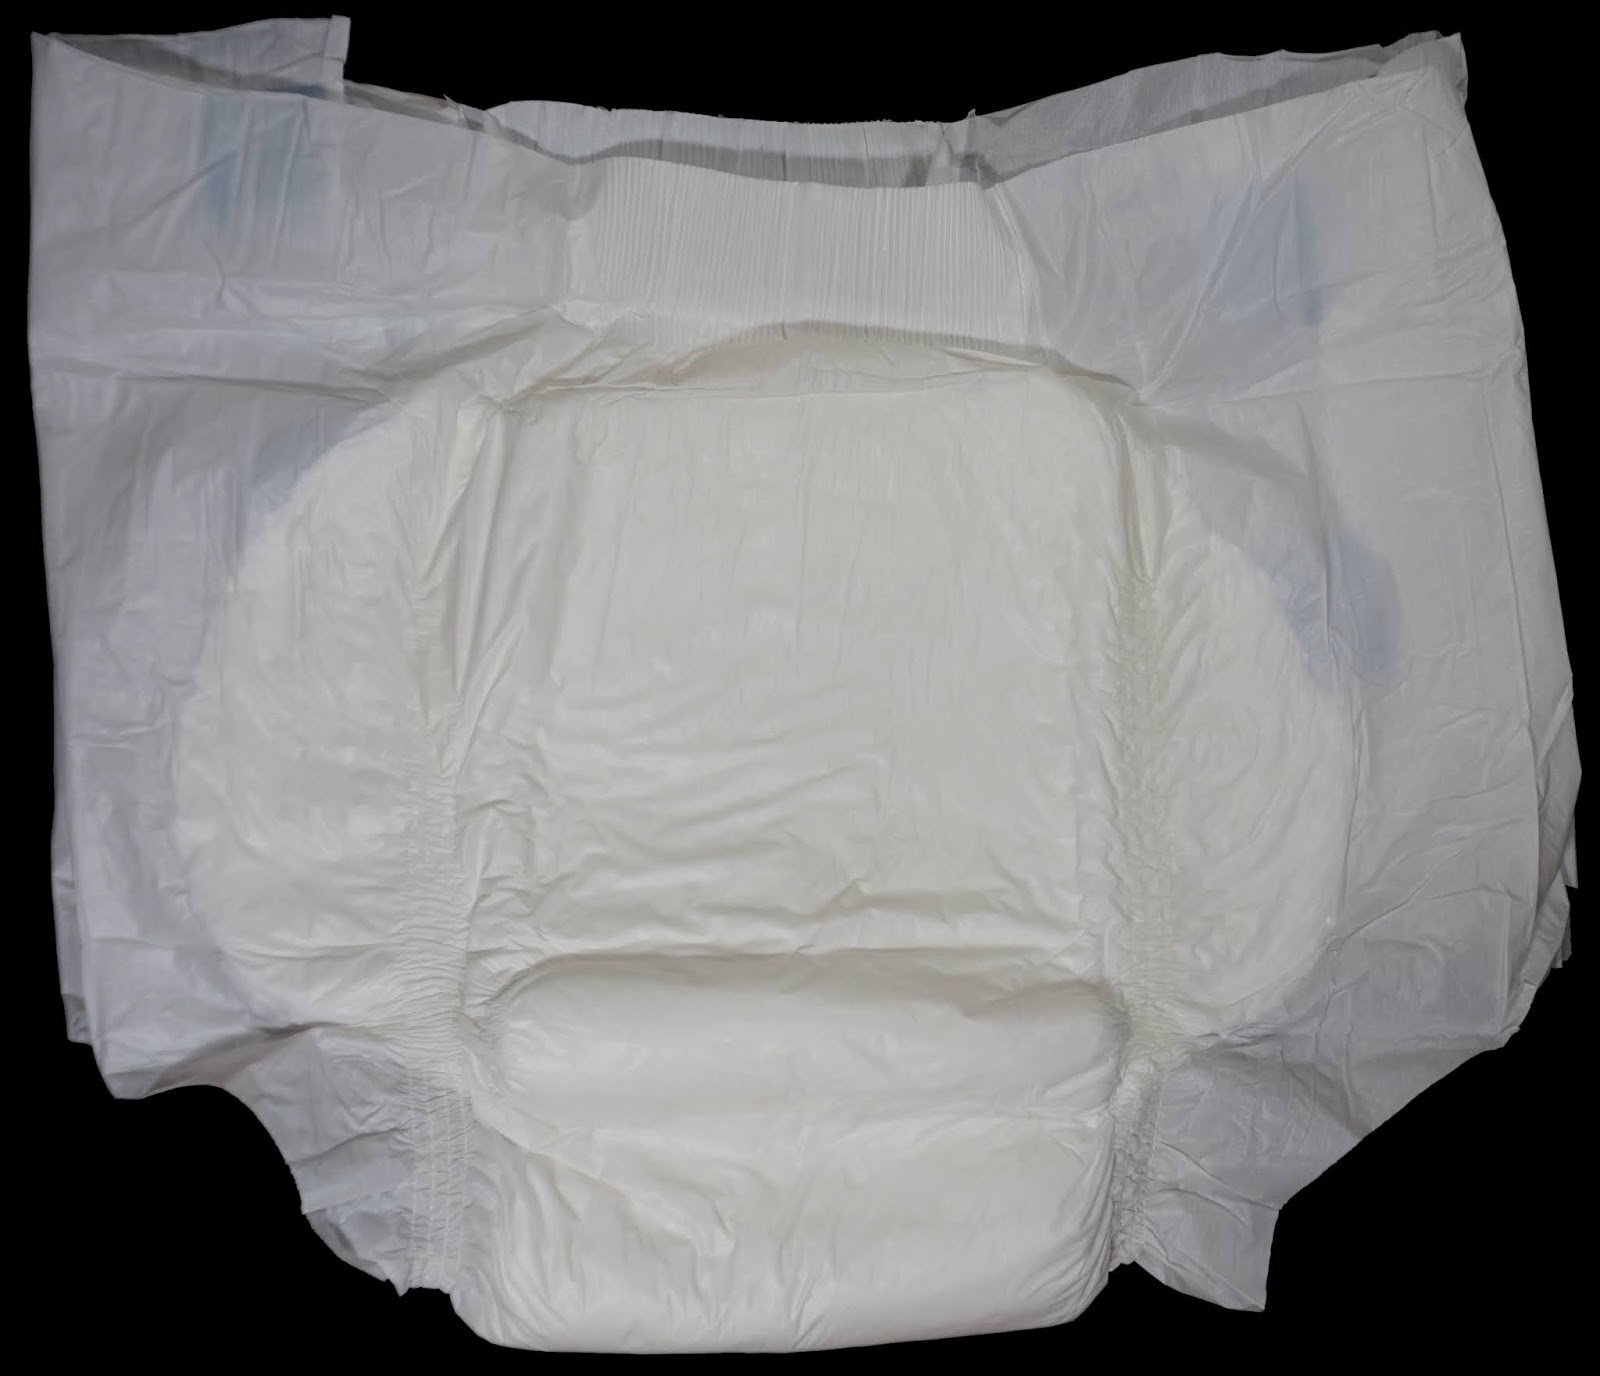 Diaper Metrics: ConfiDry 24/7 Adult Diaper Review